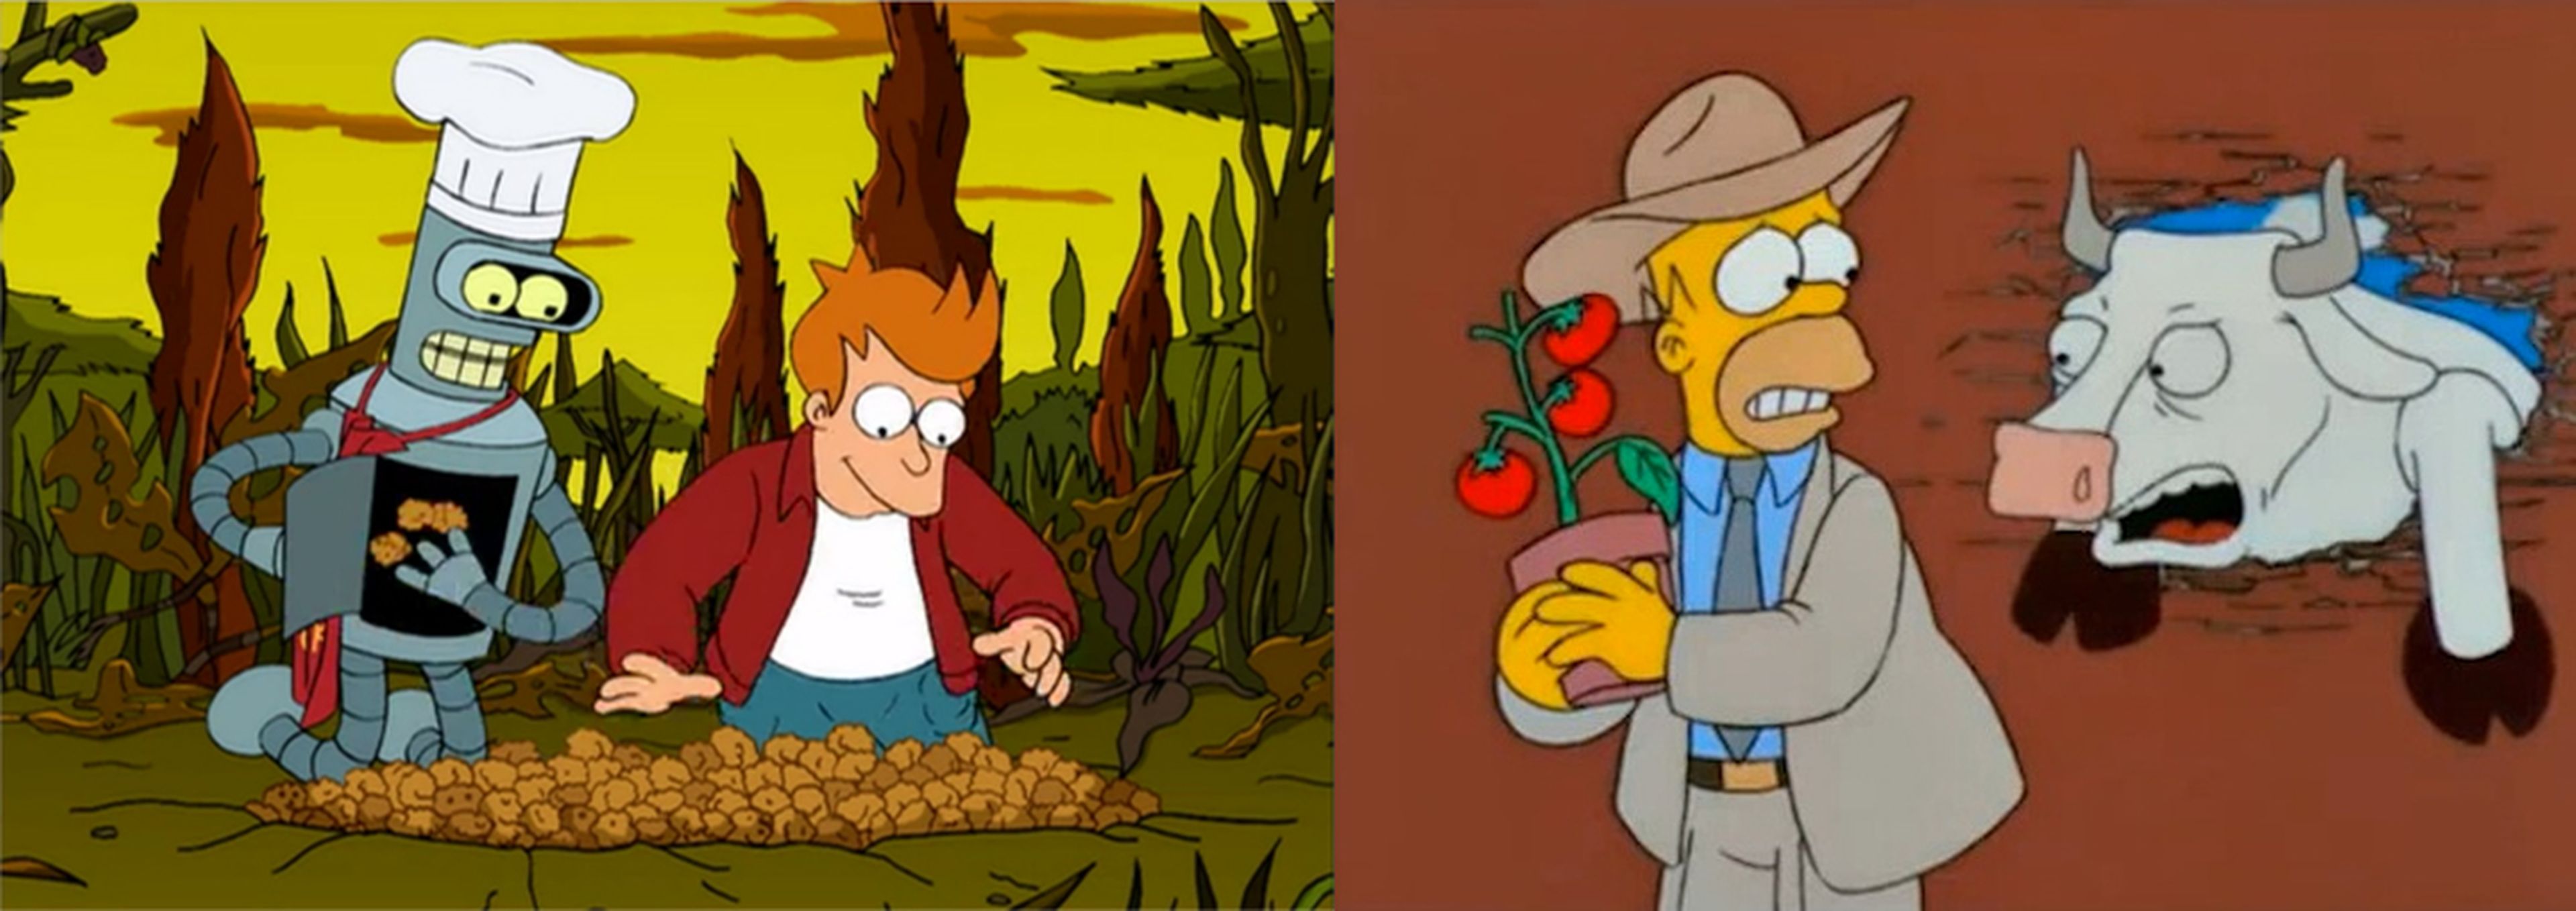 Popplers (Futurama) y Tomacco (Los Simpson)